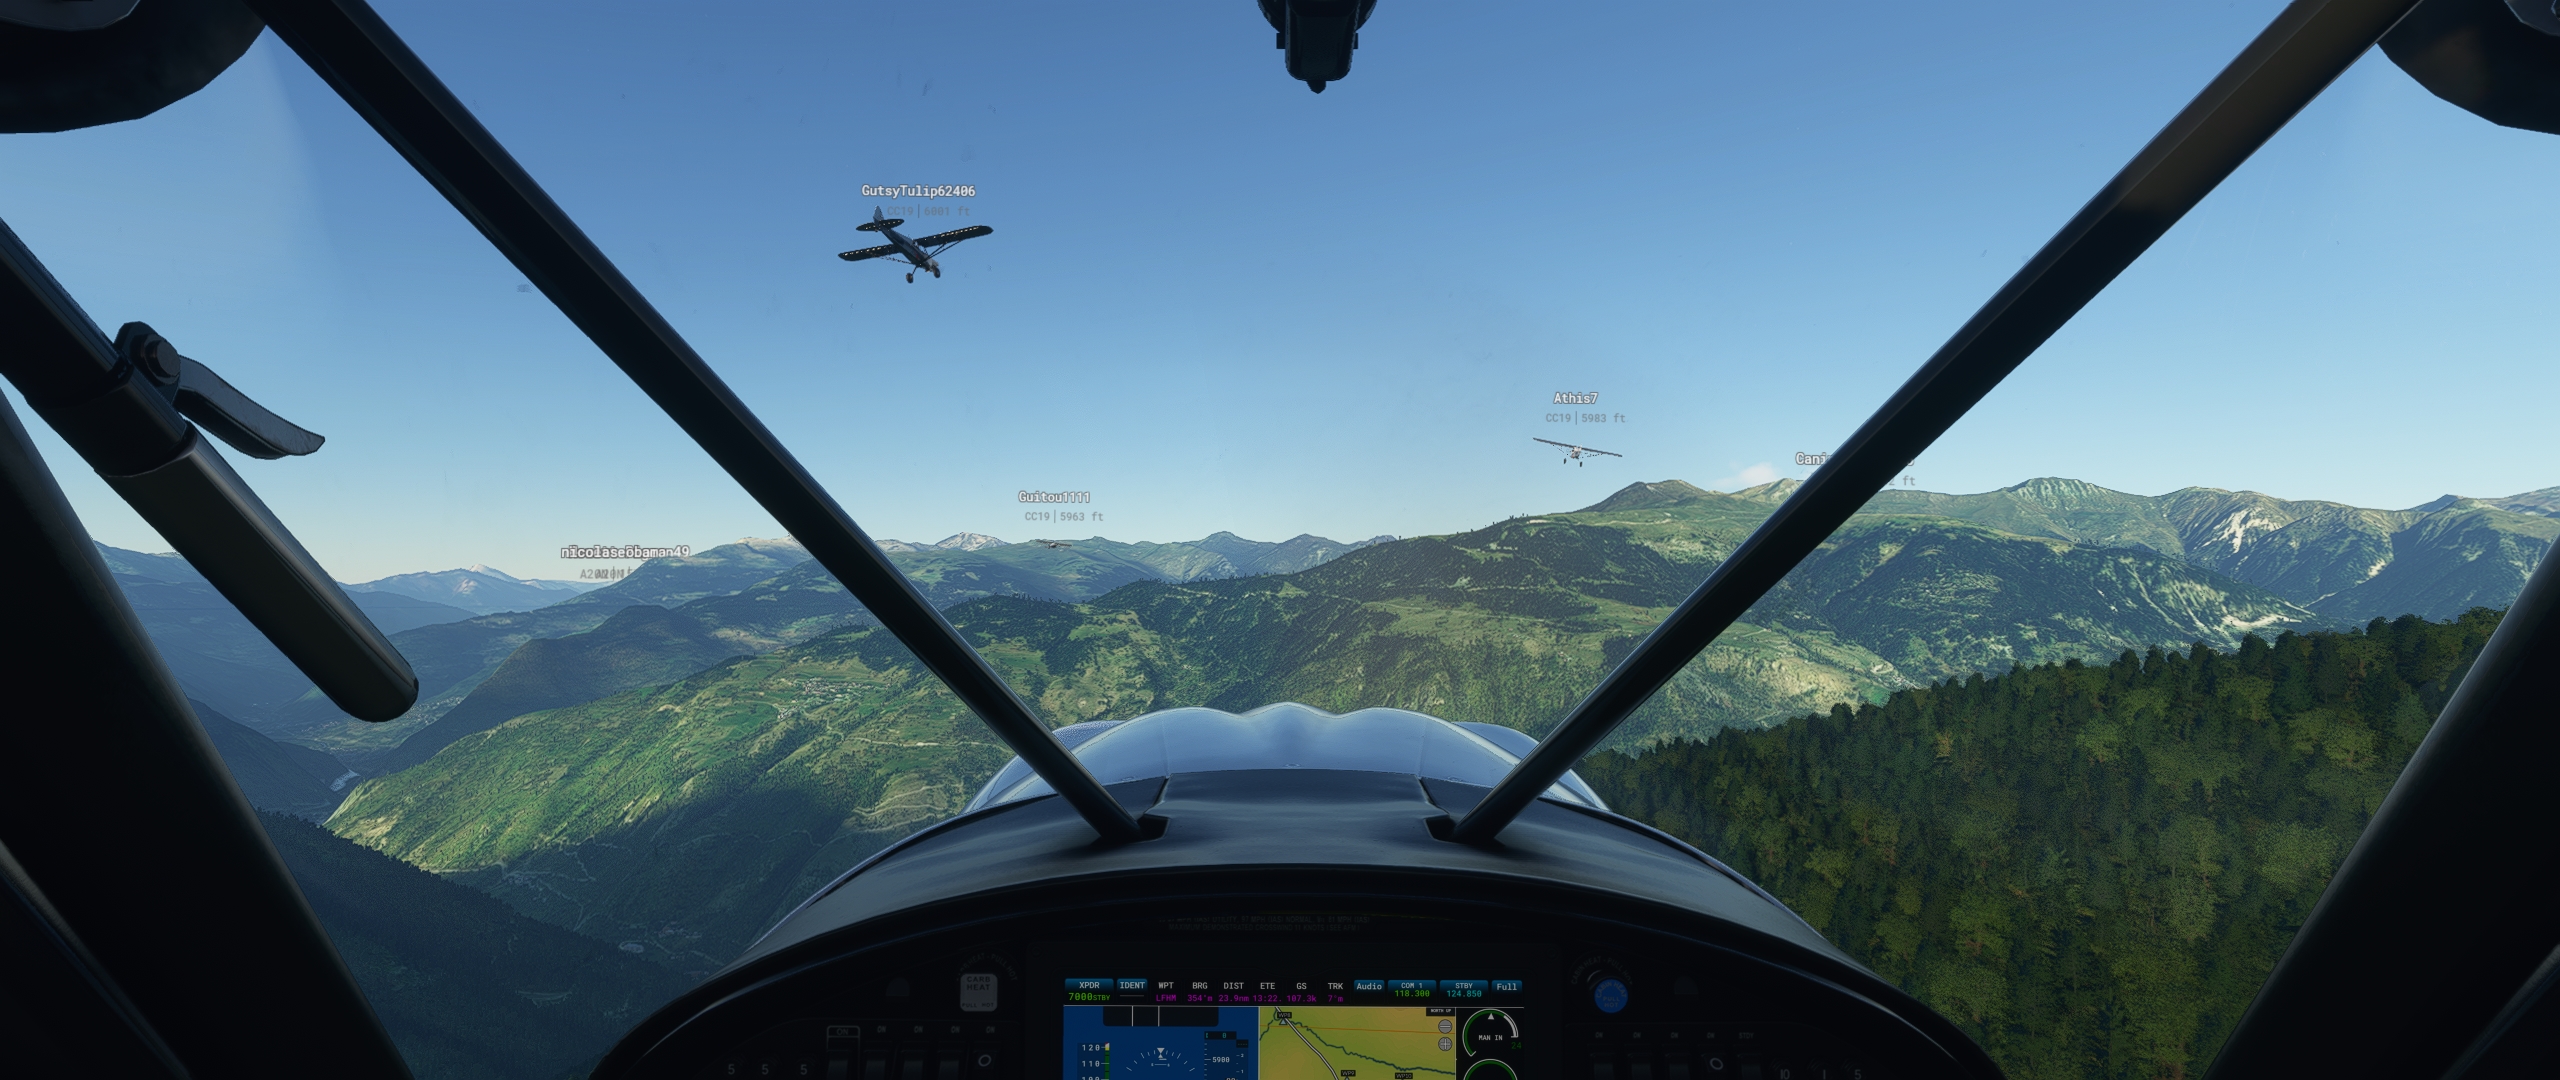 2020-11-28 17_52_49-Microsoft Flight Simulator - 1.11.6.0.jpg